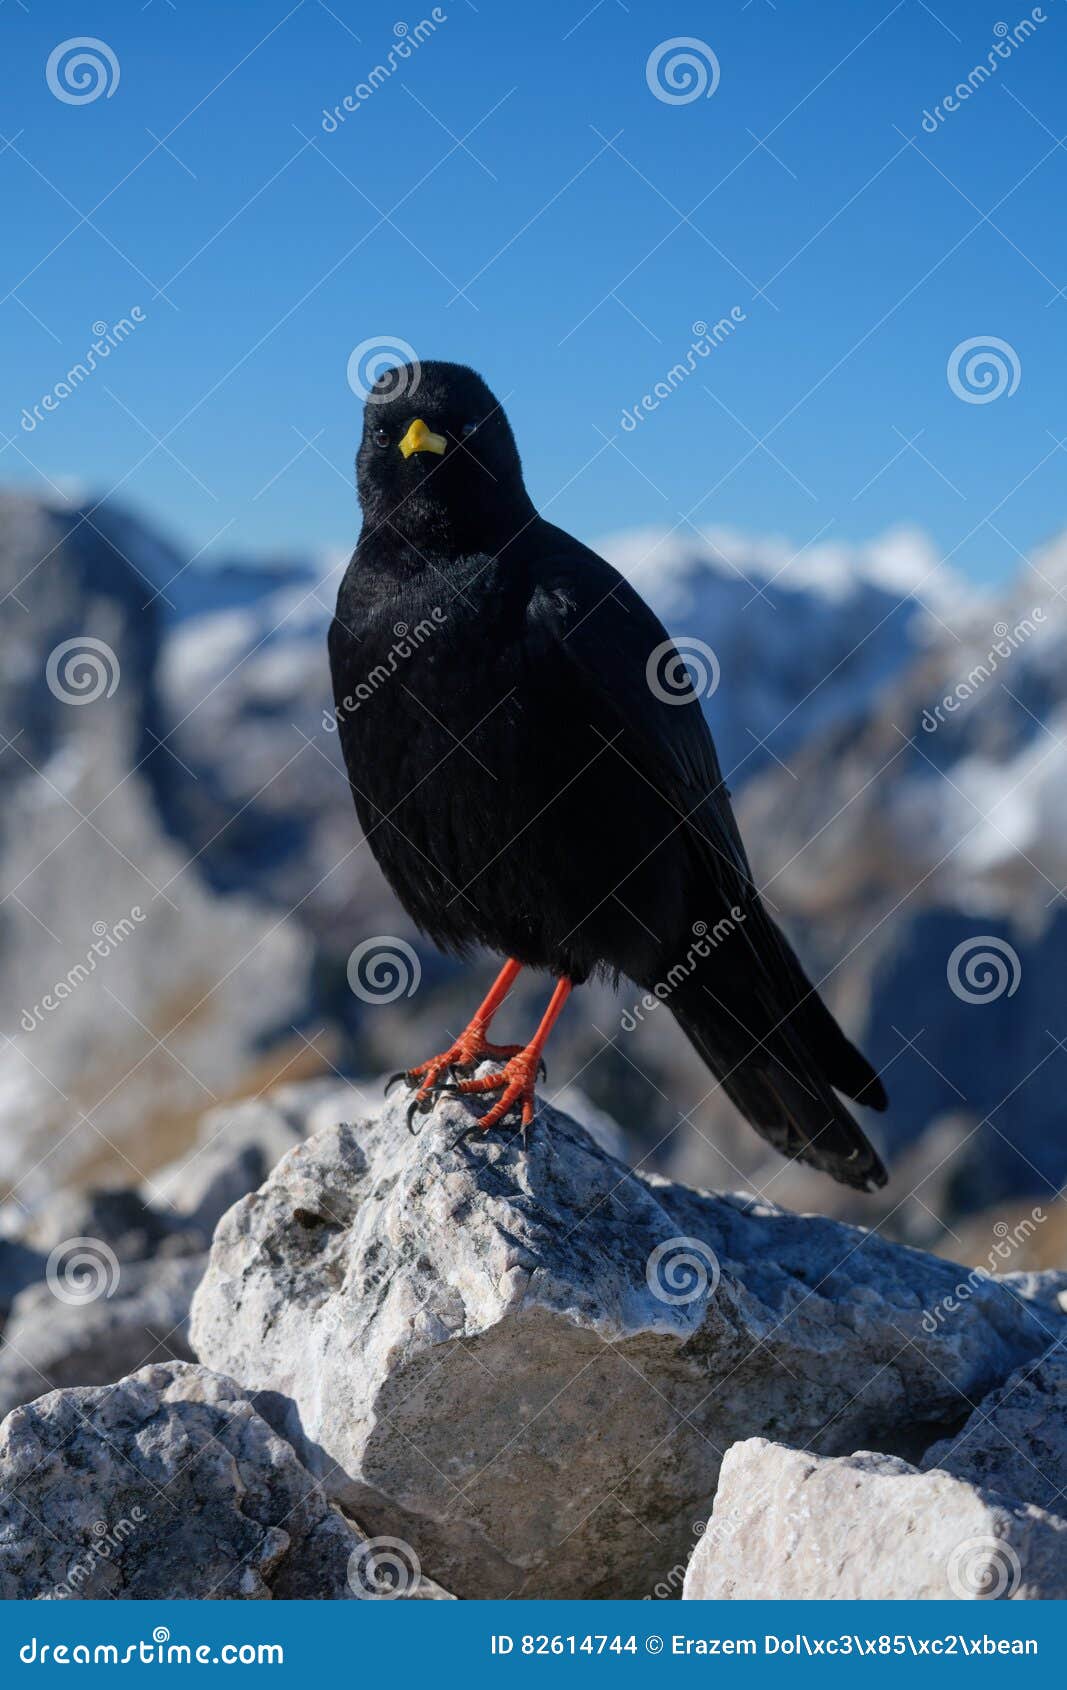 black mountain bird